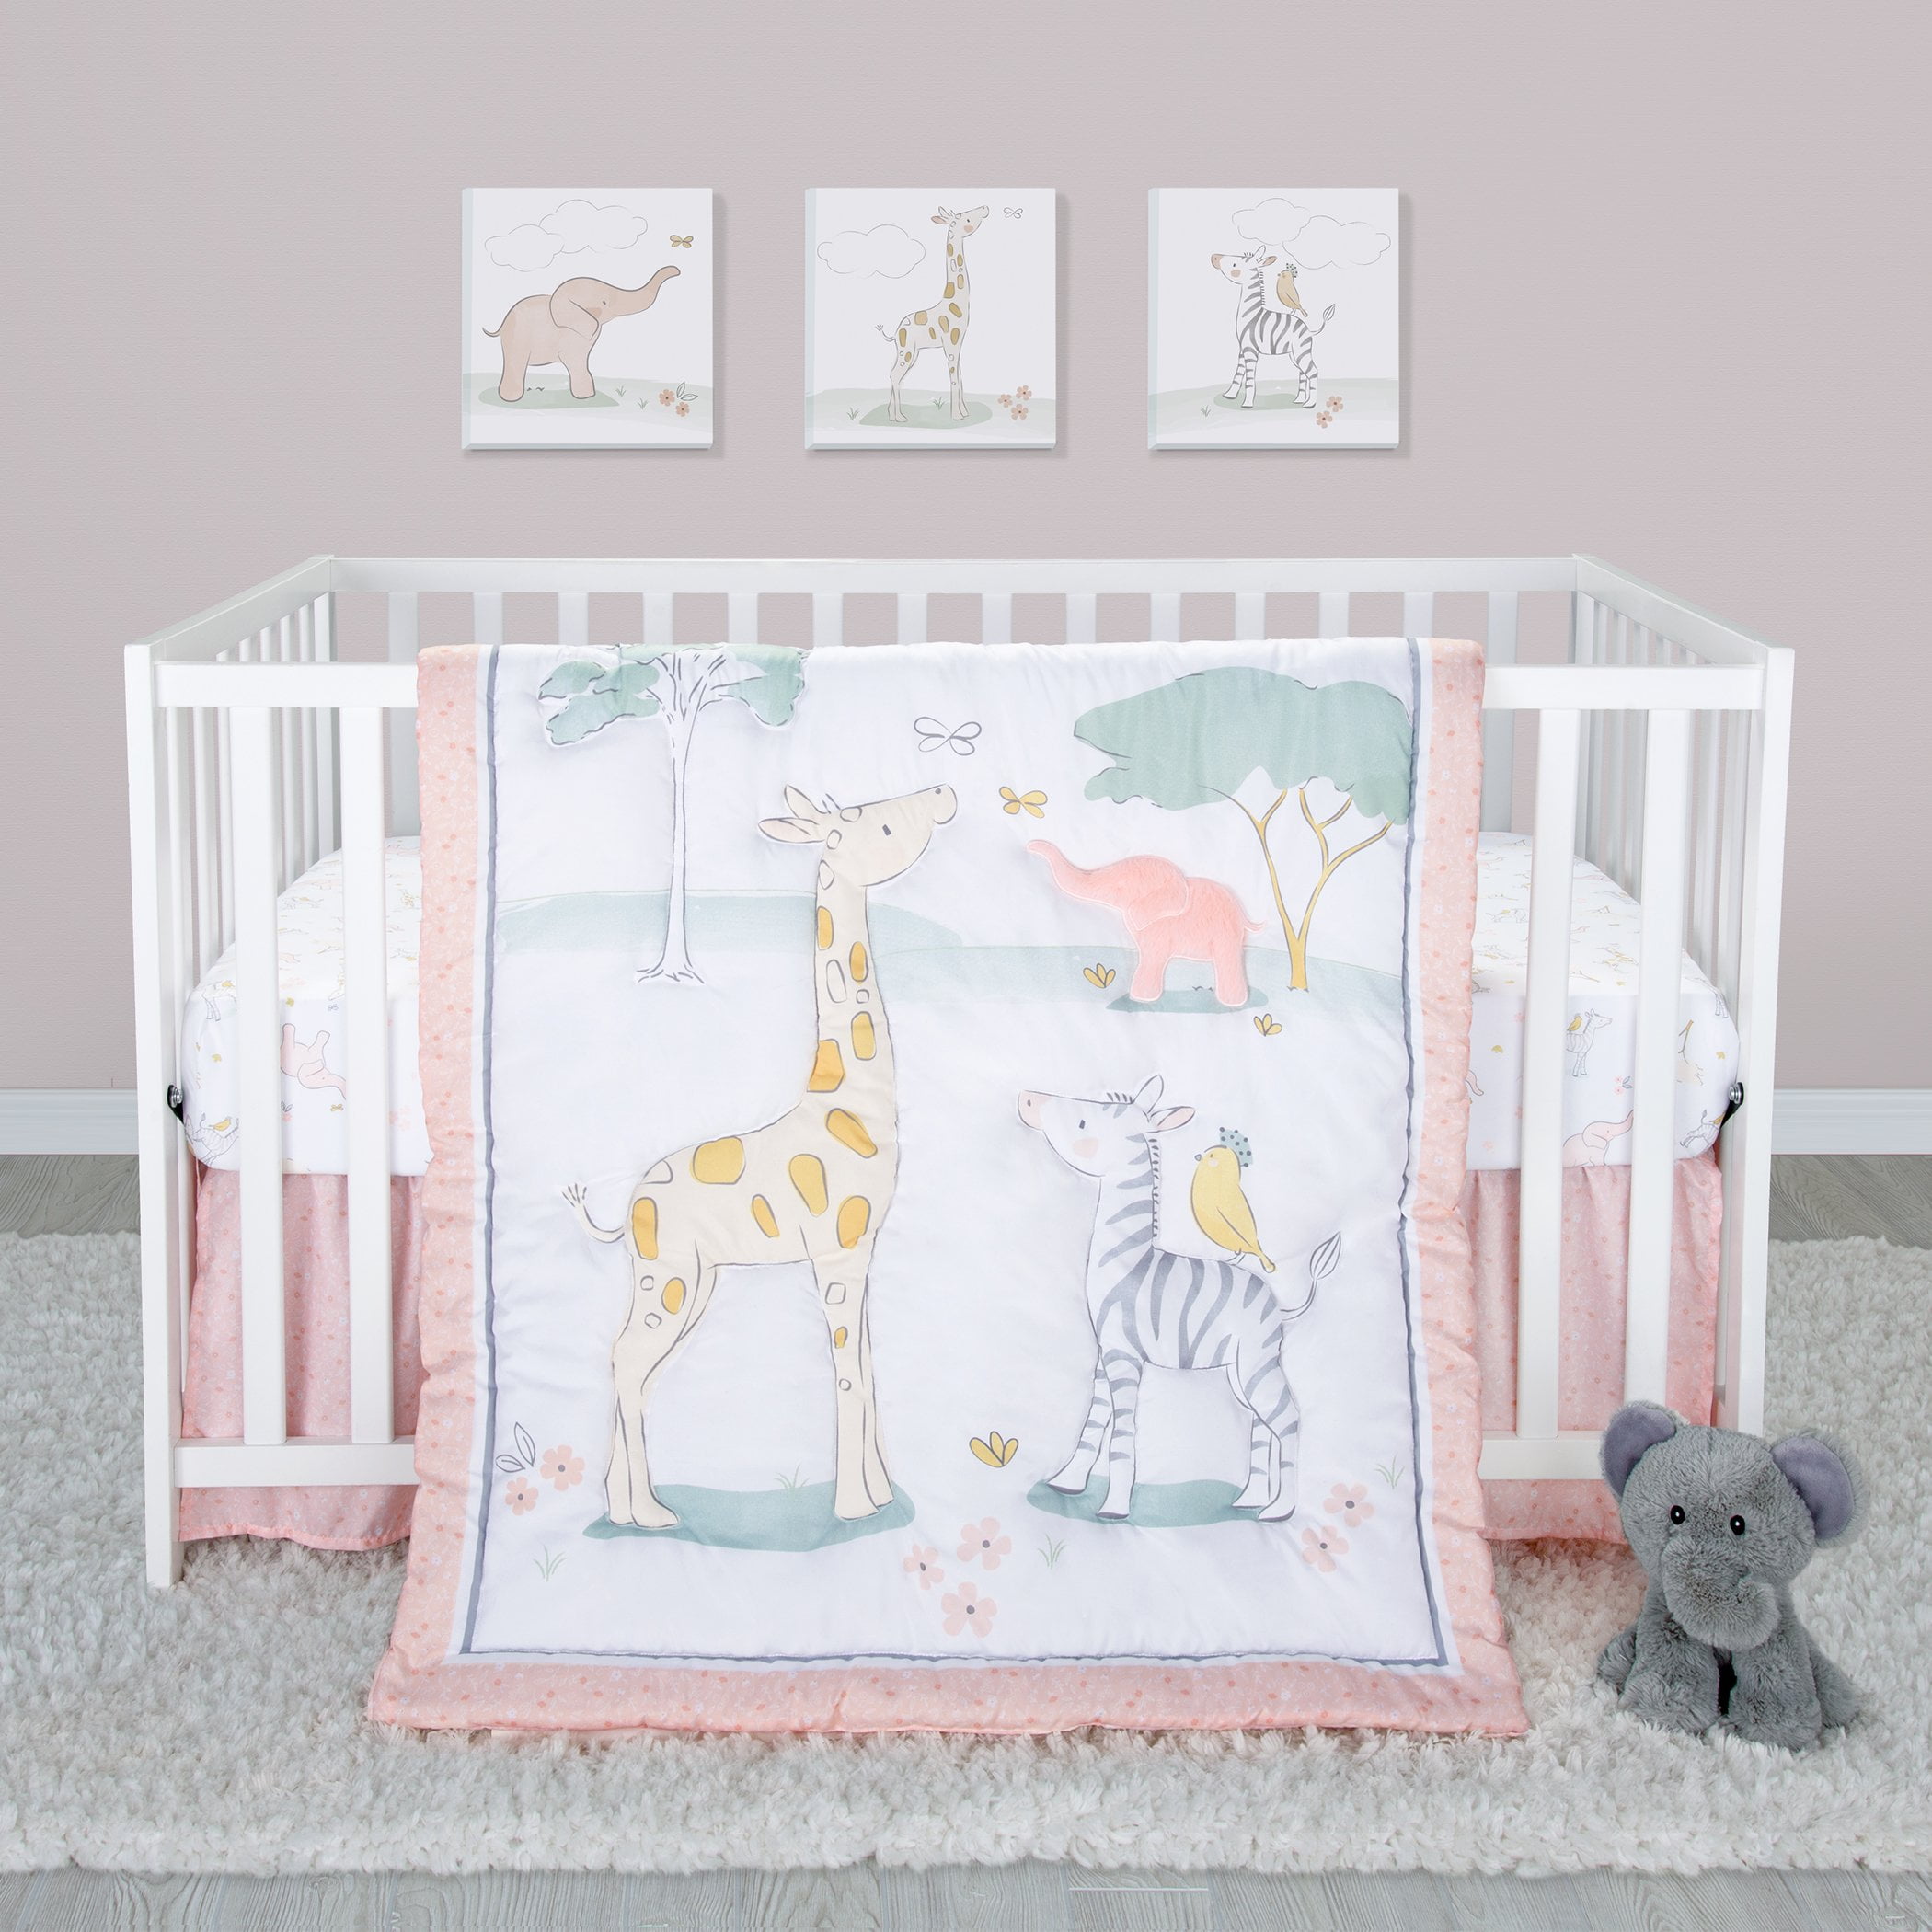 Brandream Dinosaur Crib Bedding Sets for Boys with Bumper Pads 100% Hypoallergenic Cotton Baby Nursery Bedding Set 11 Pieces 